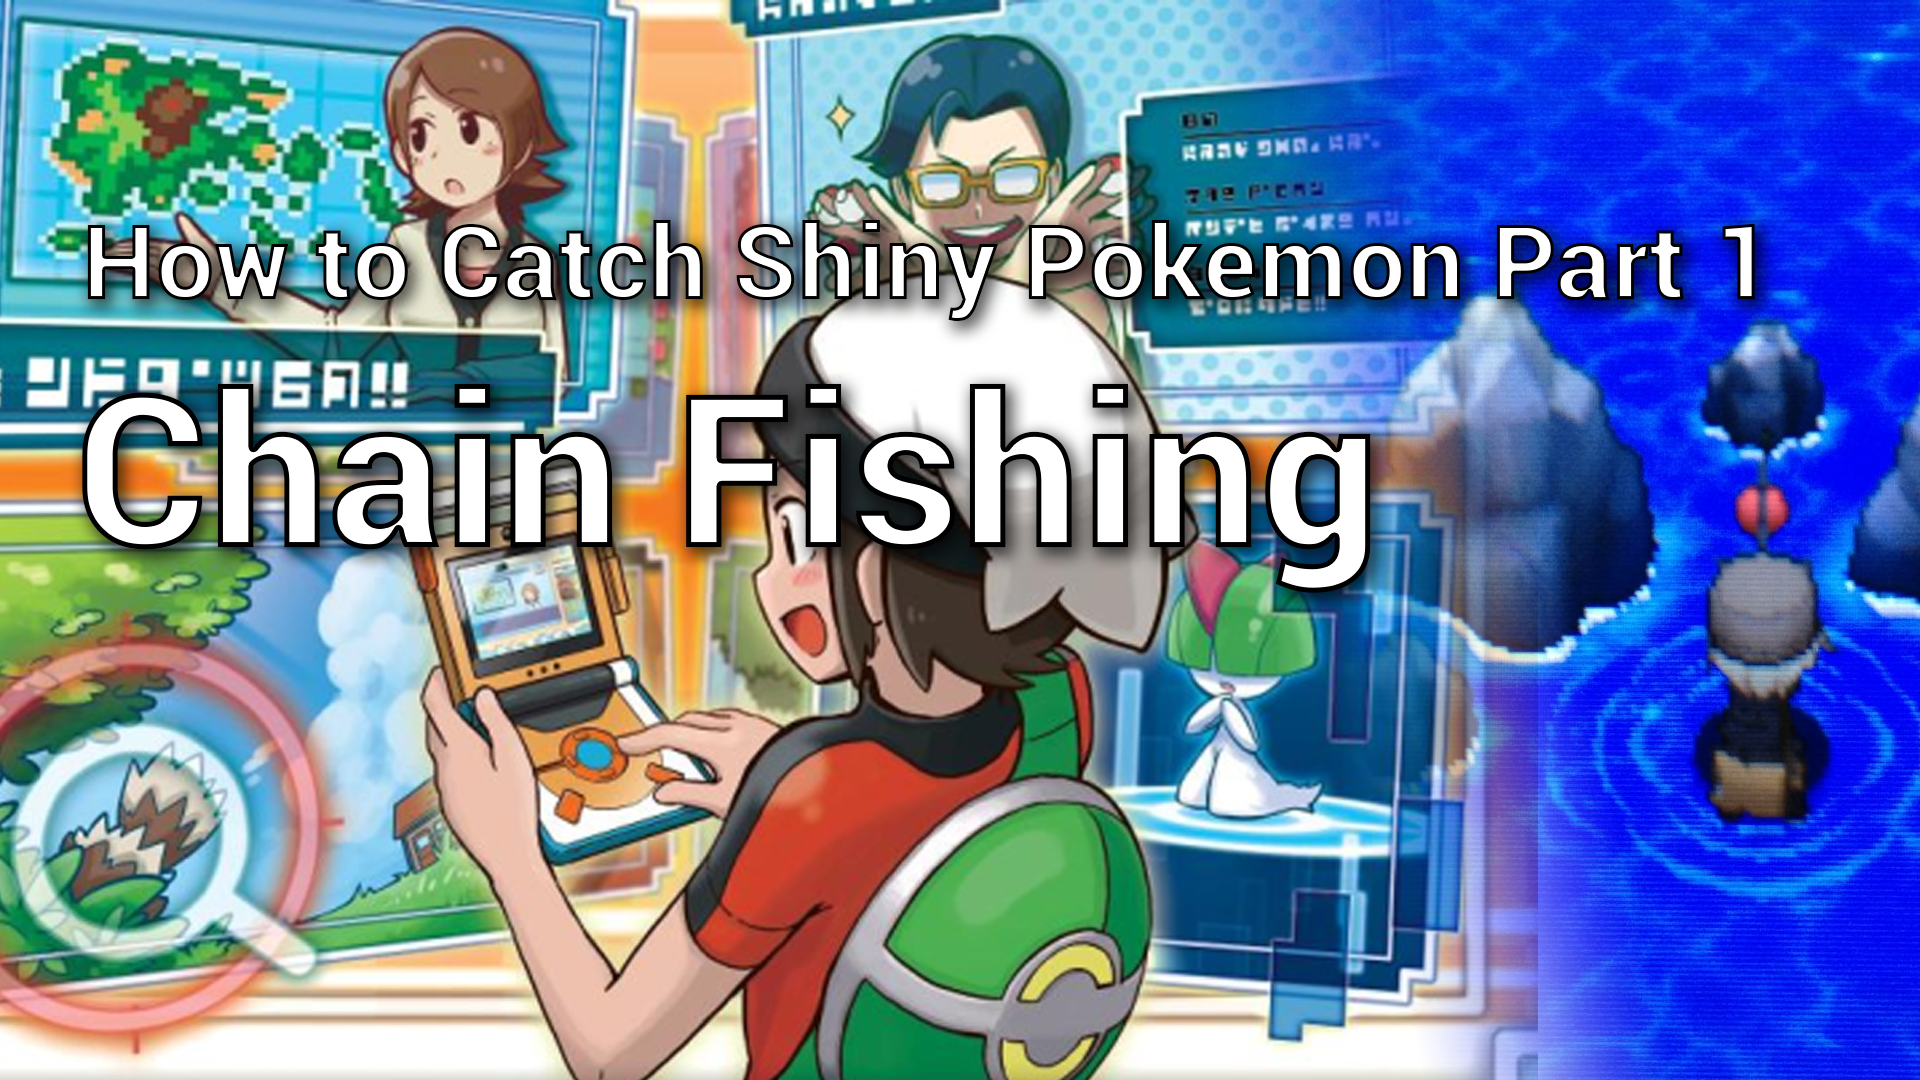 How to Catch Shiny Pokemon Part 1 - Chain Fishing